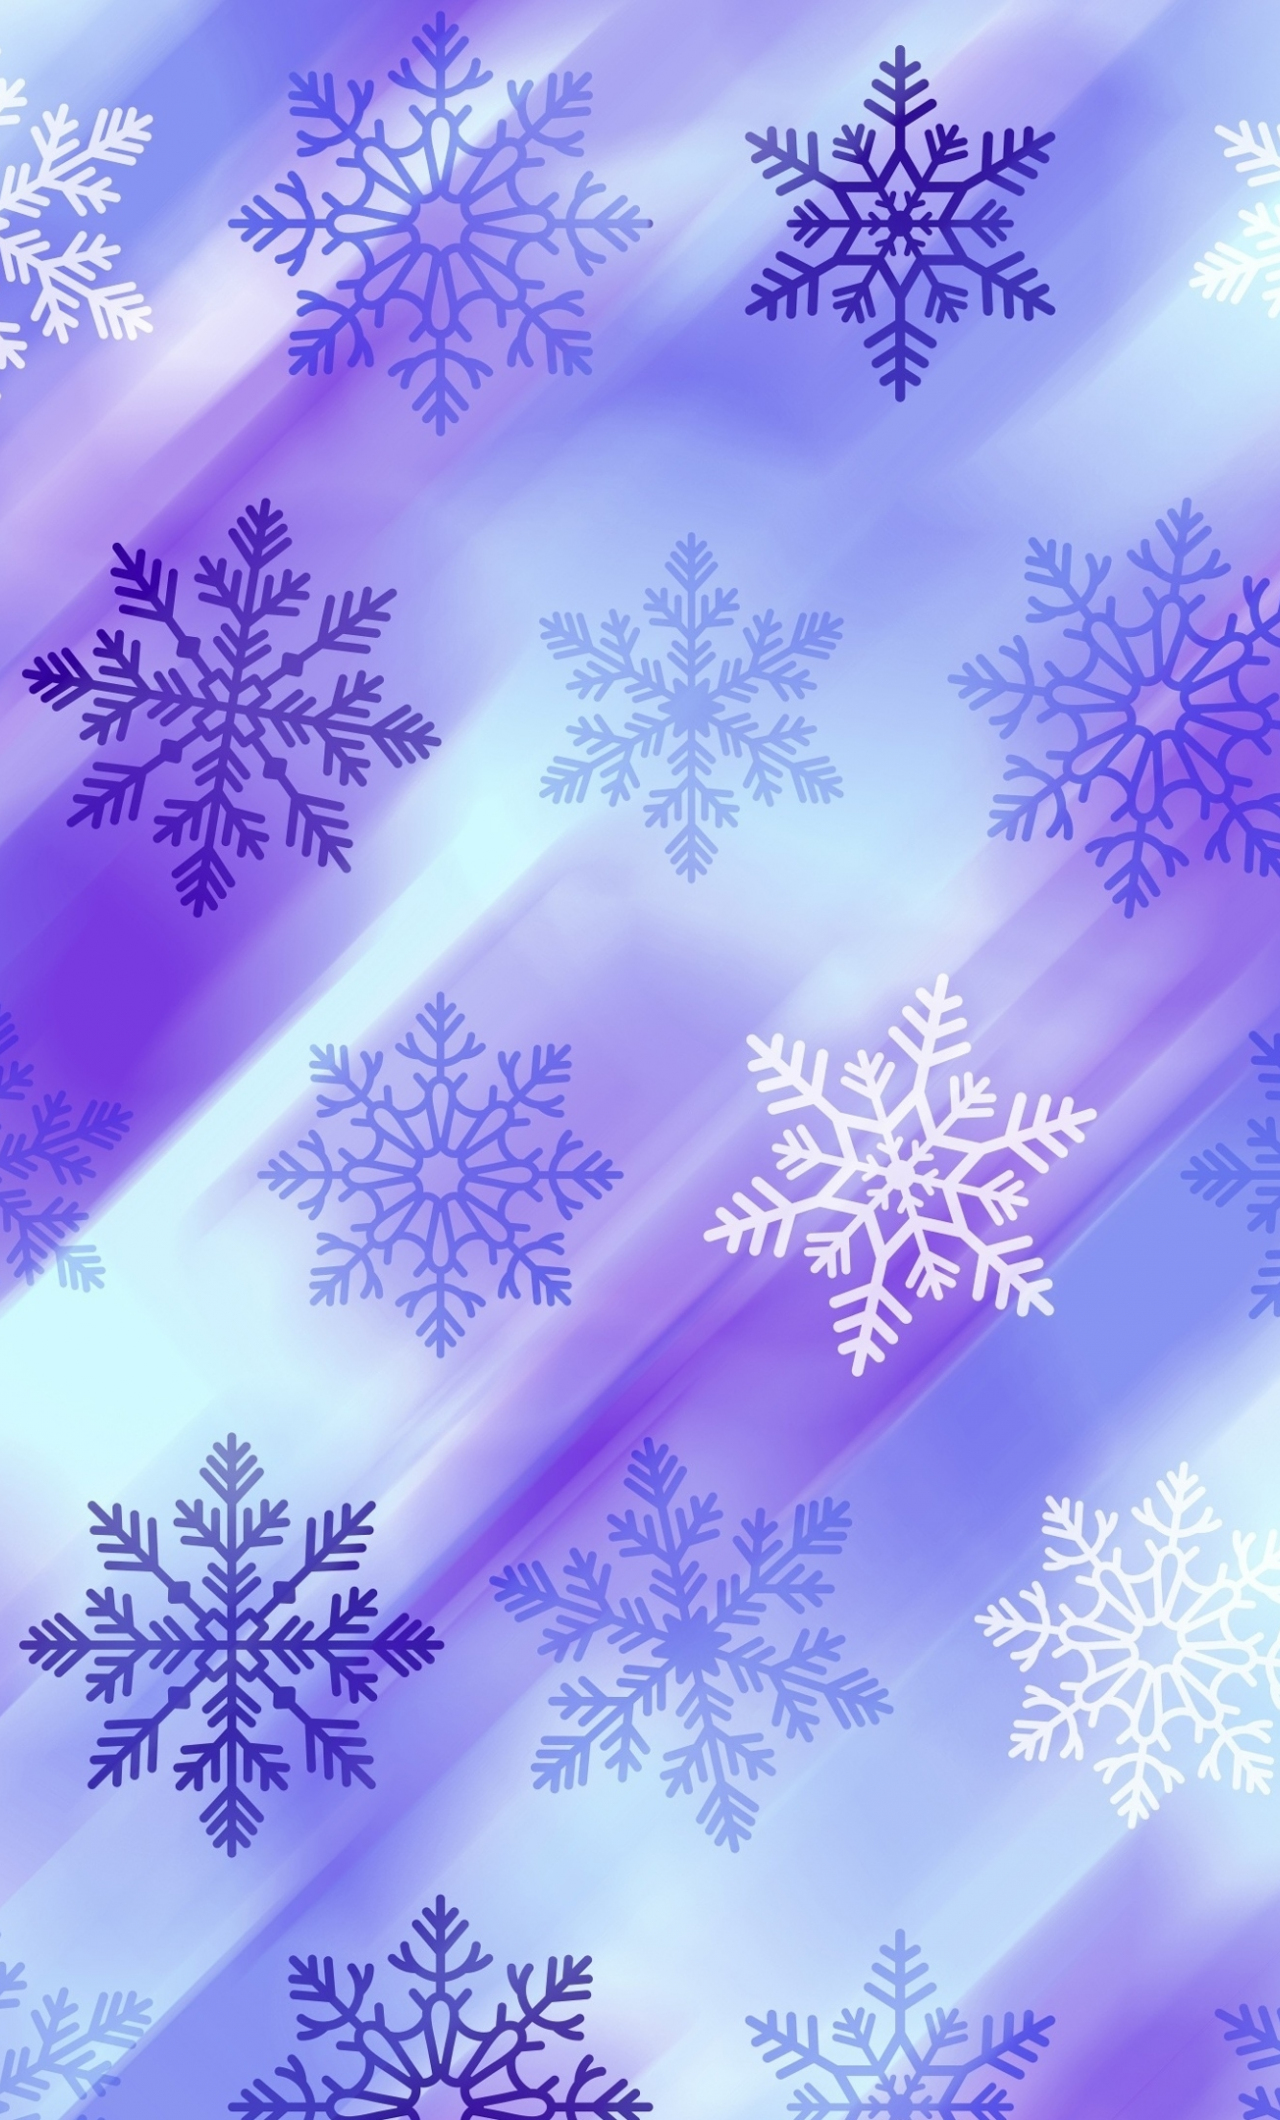 Download wallpaper x snowflake bluish